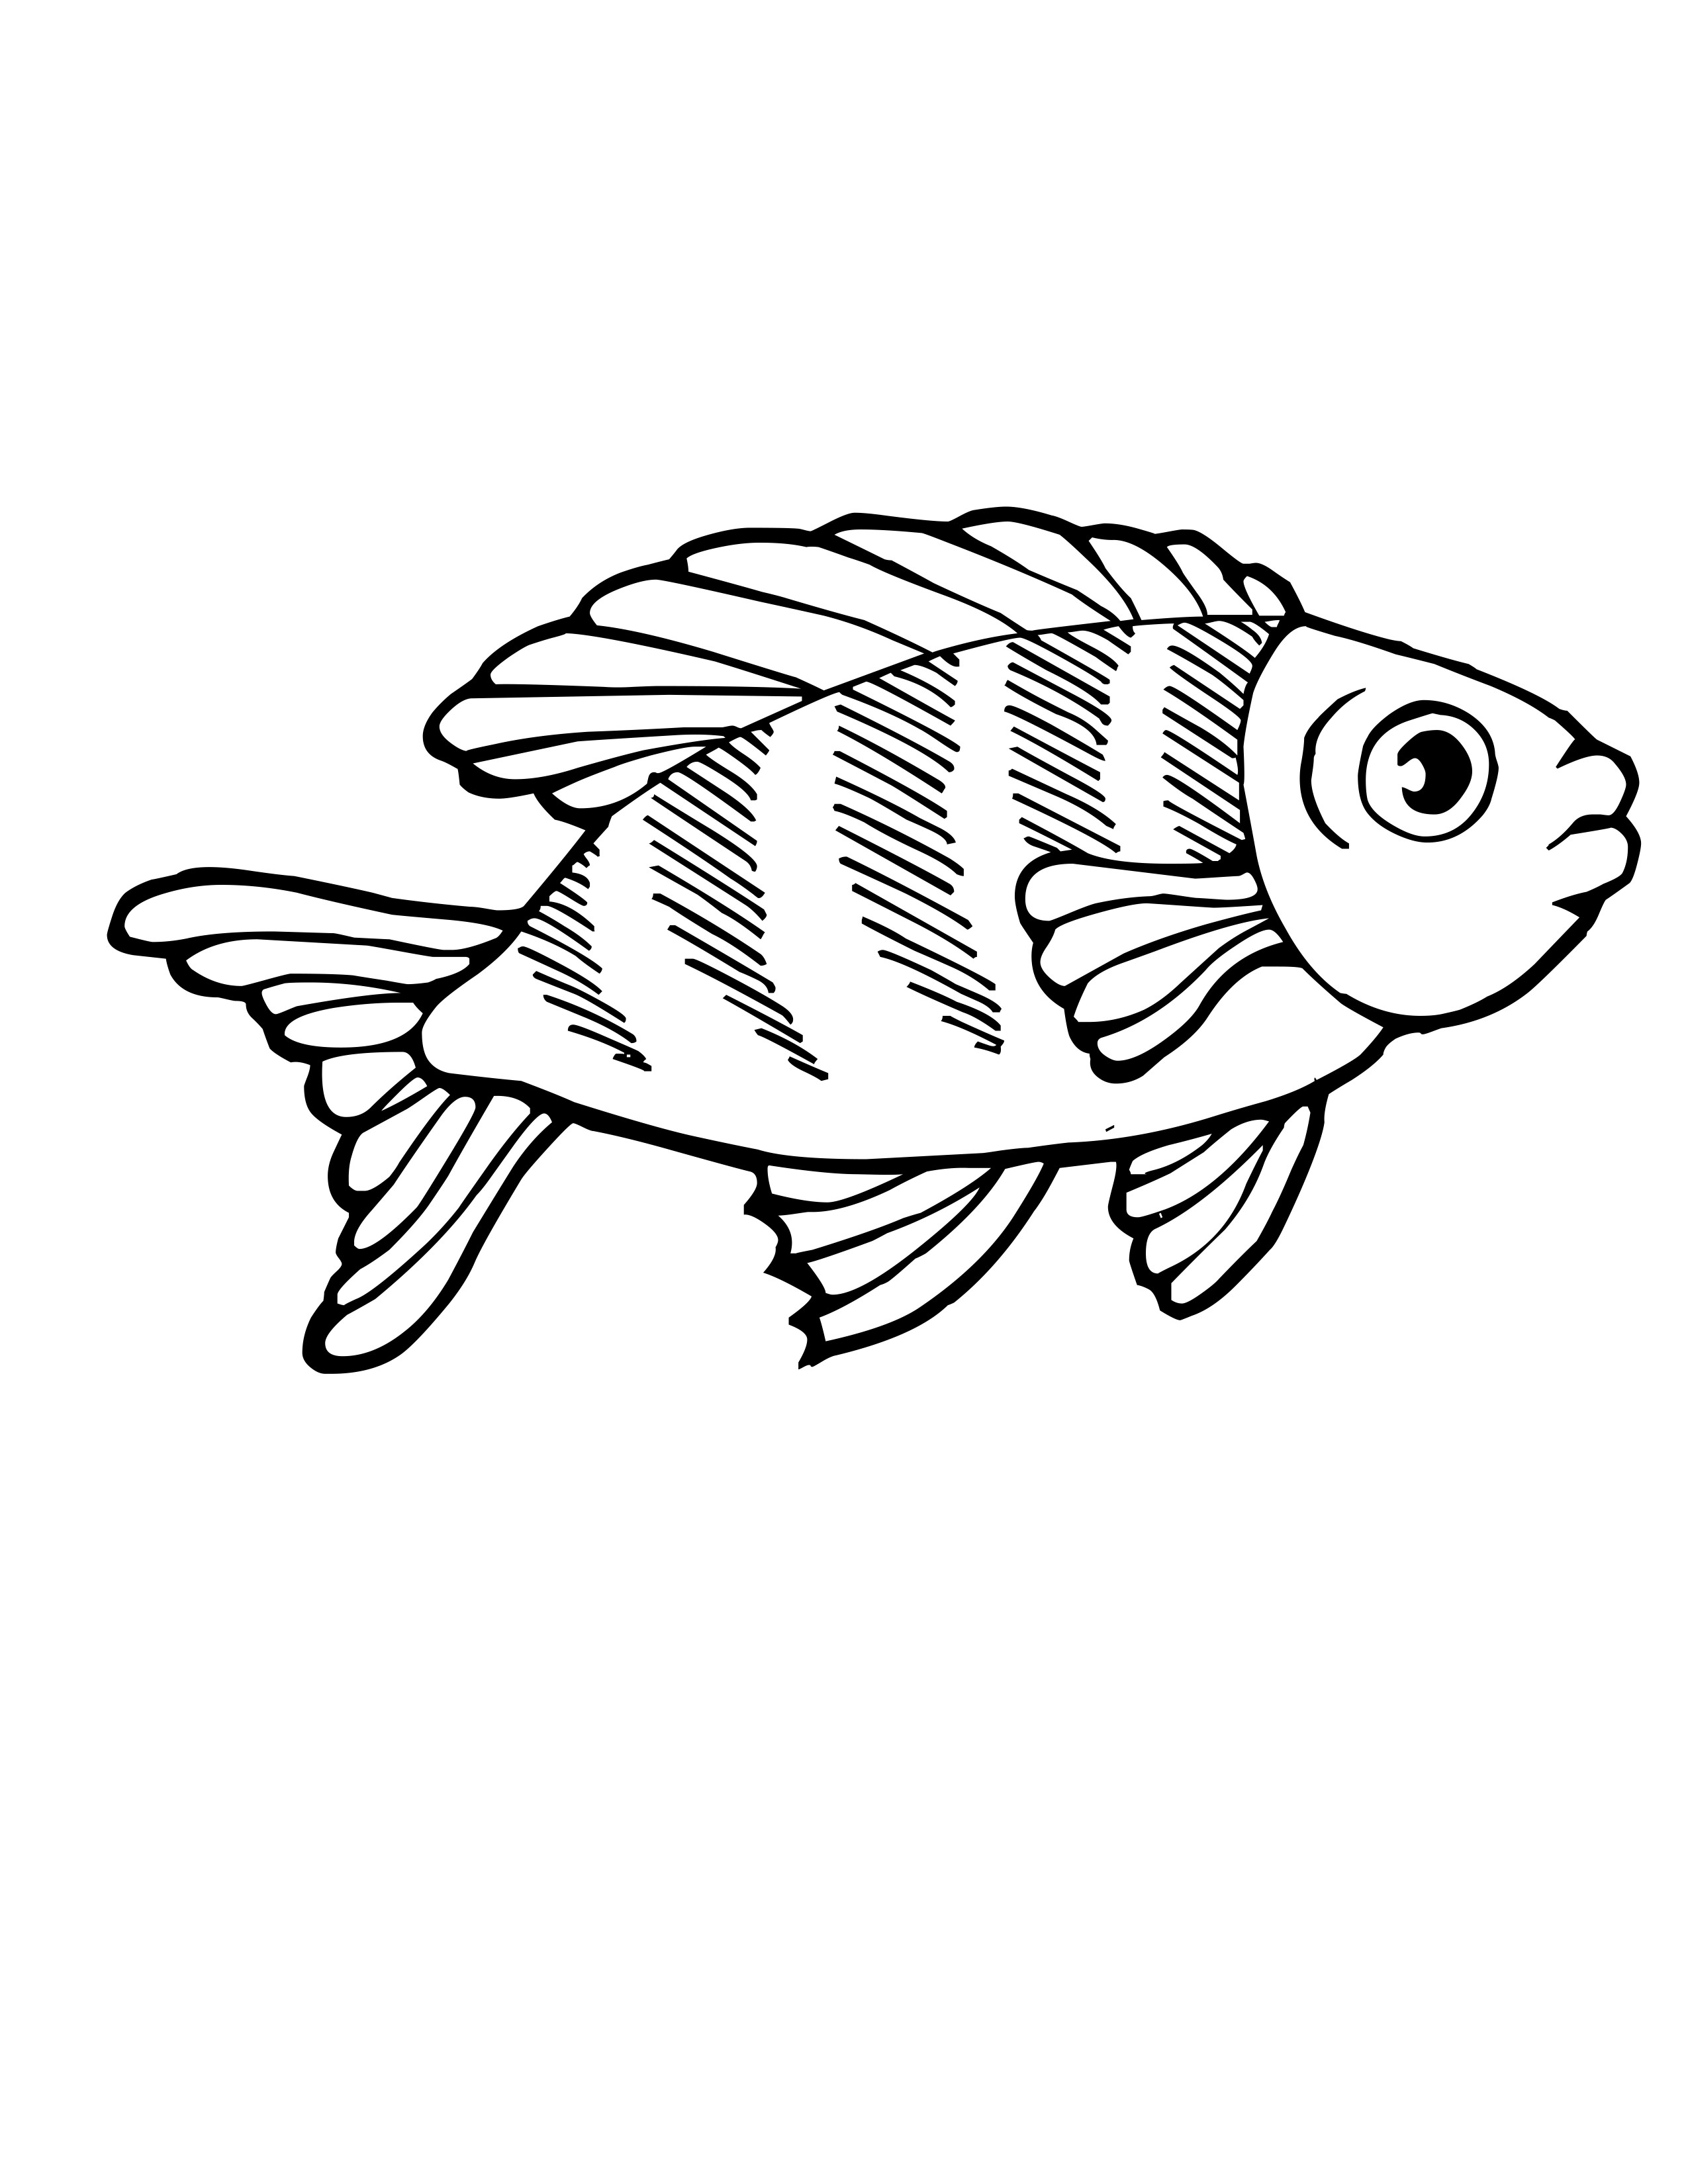 Free Koi Fish Coloring Page, Download Free Koi Fish Coloring Page png  images, Free ClipArts on Clipart Library